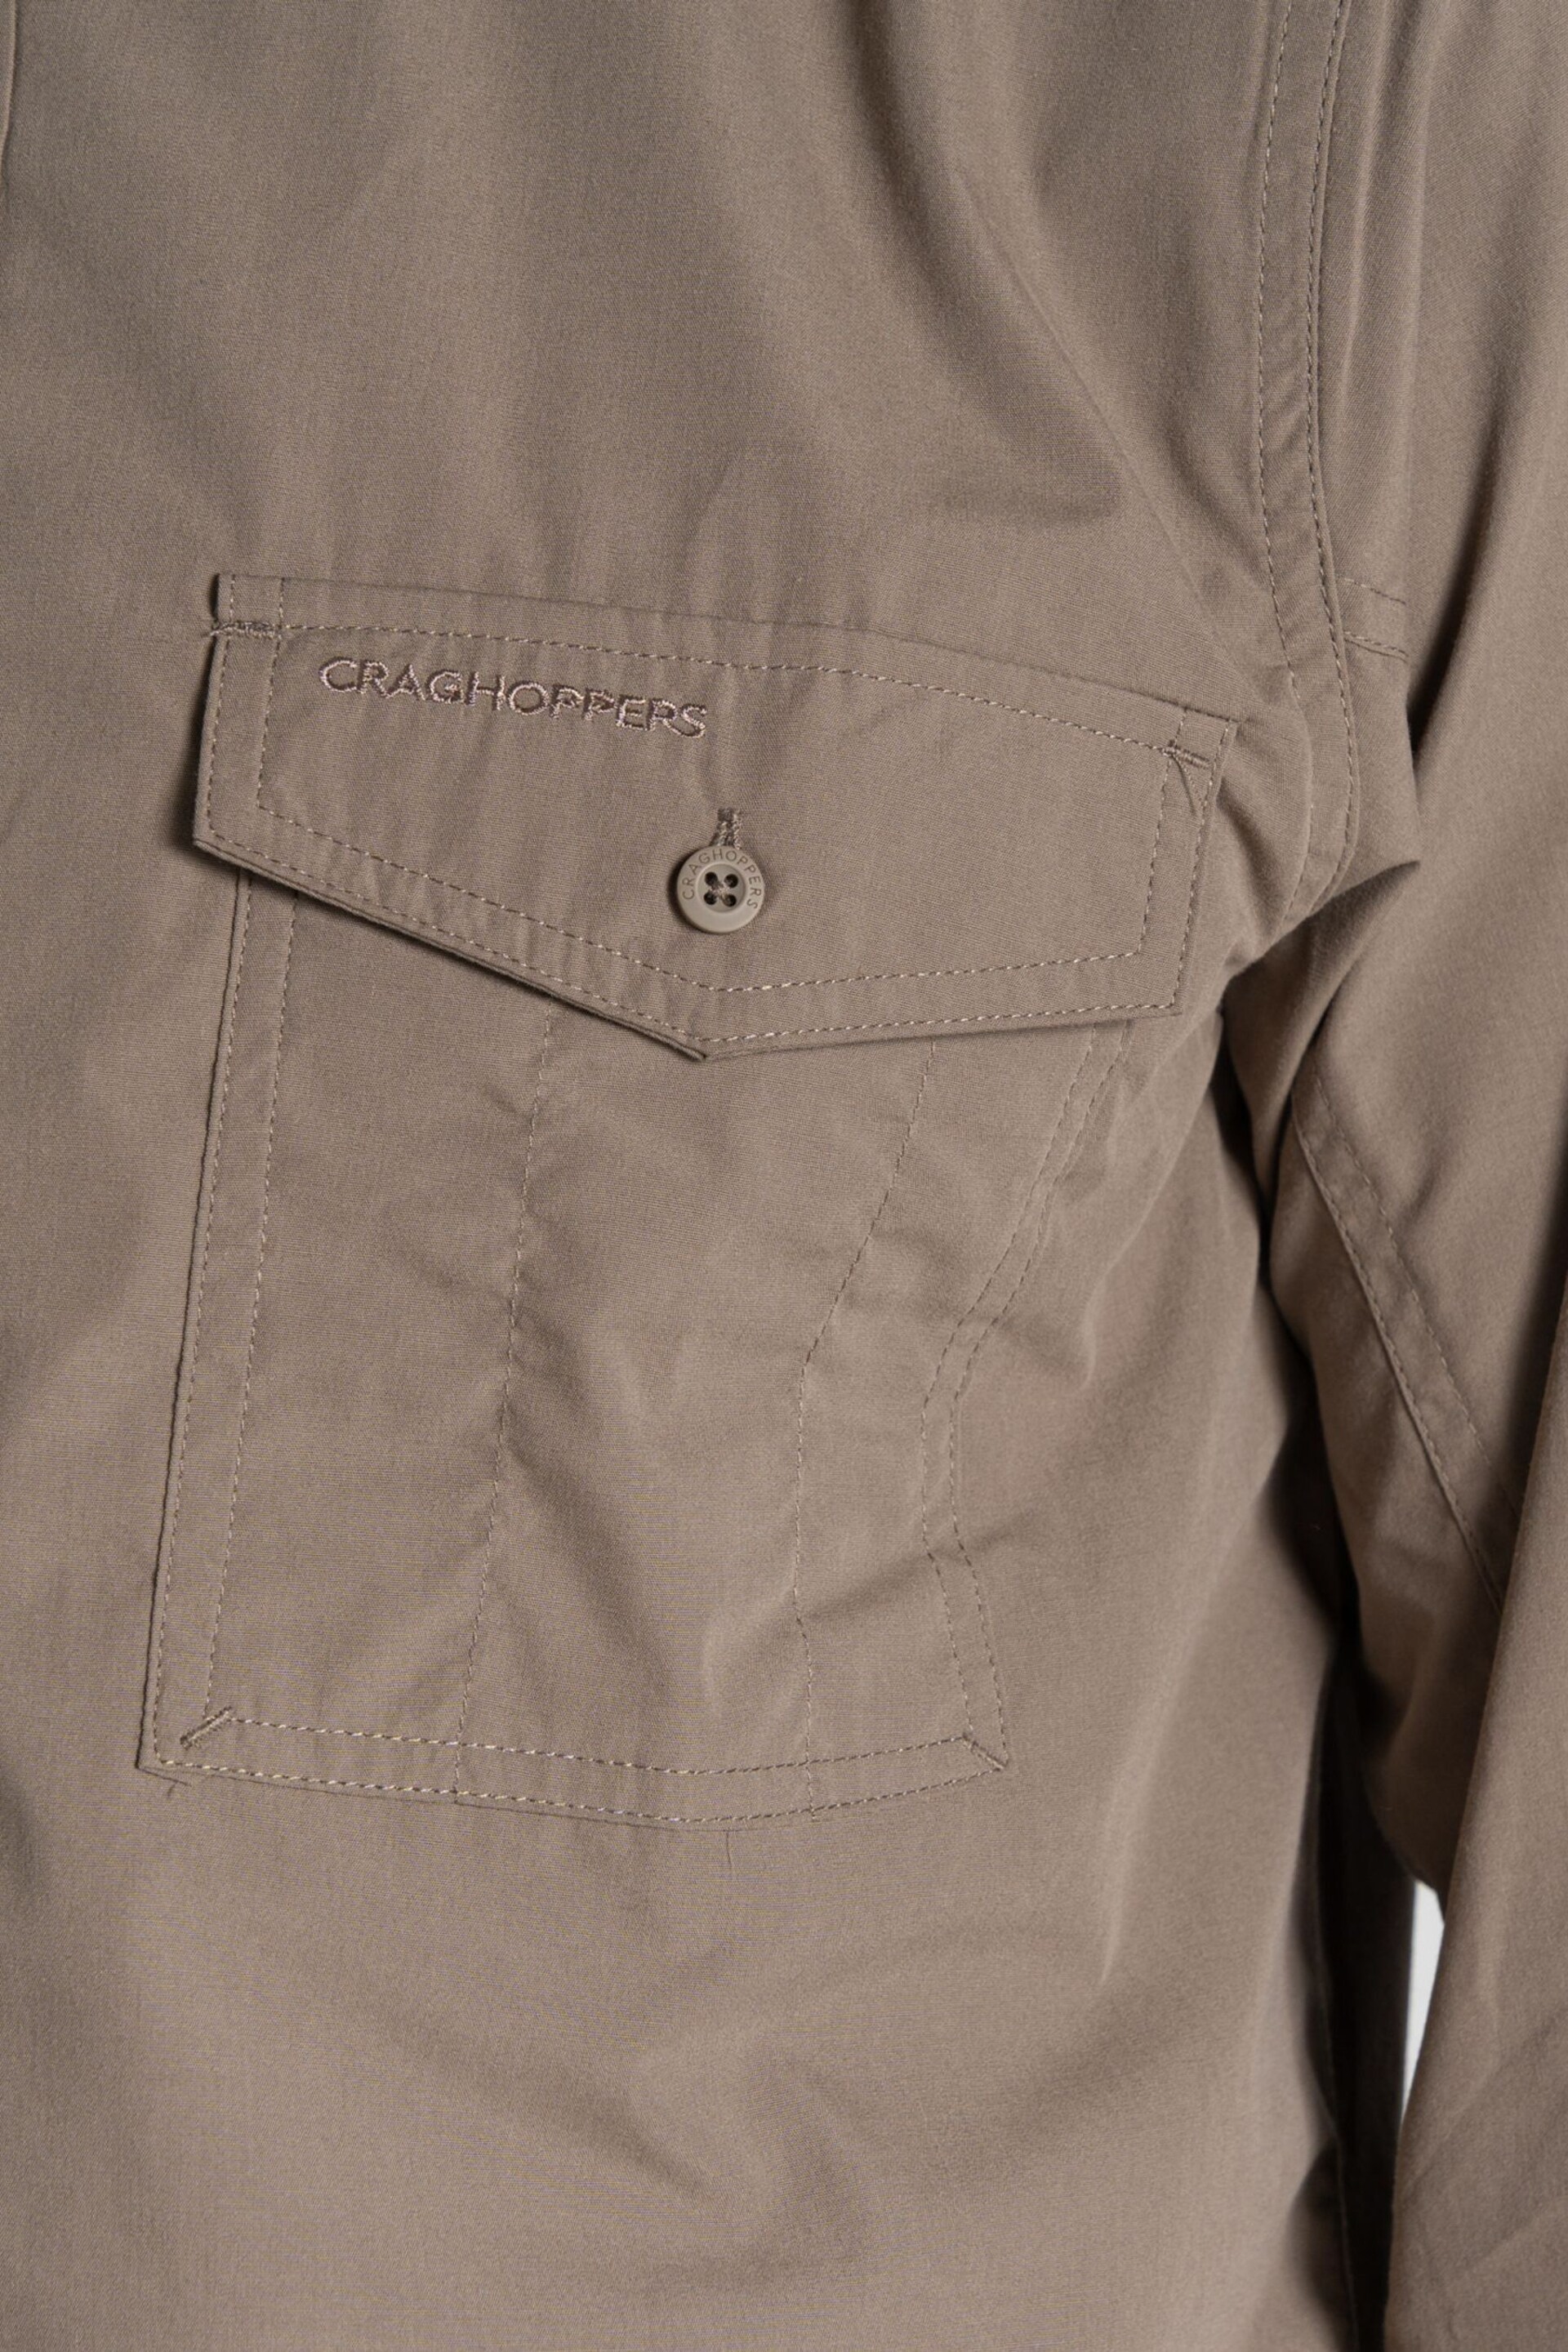 Craghoppers Kiwi Long Sleeved Brown Shirt - Image 5 of 5